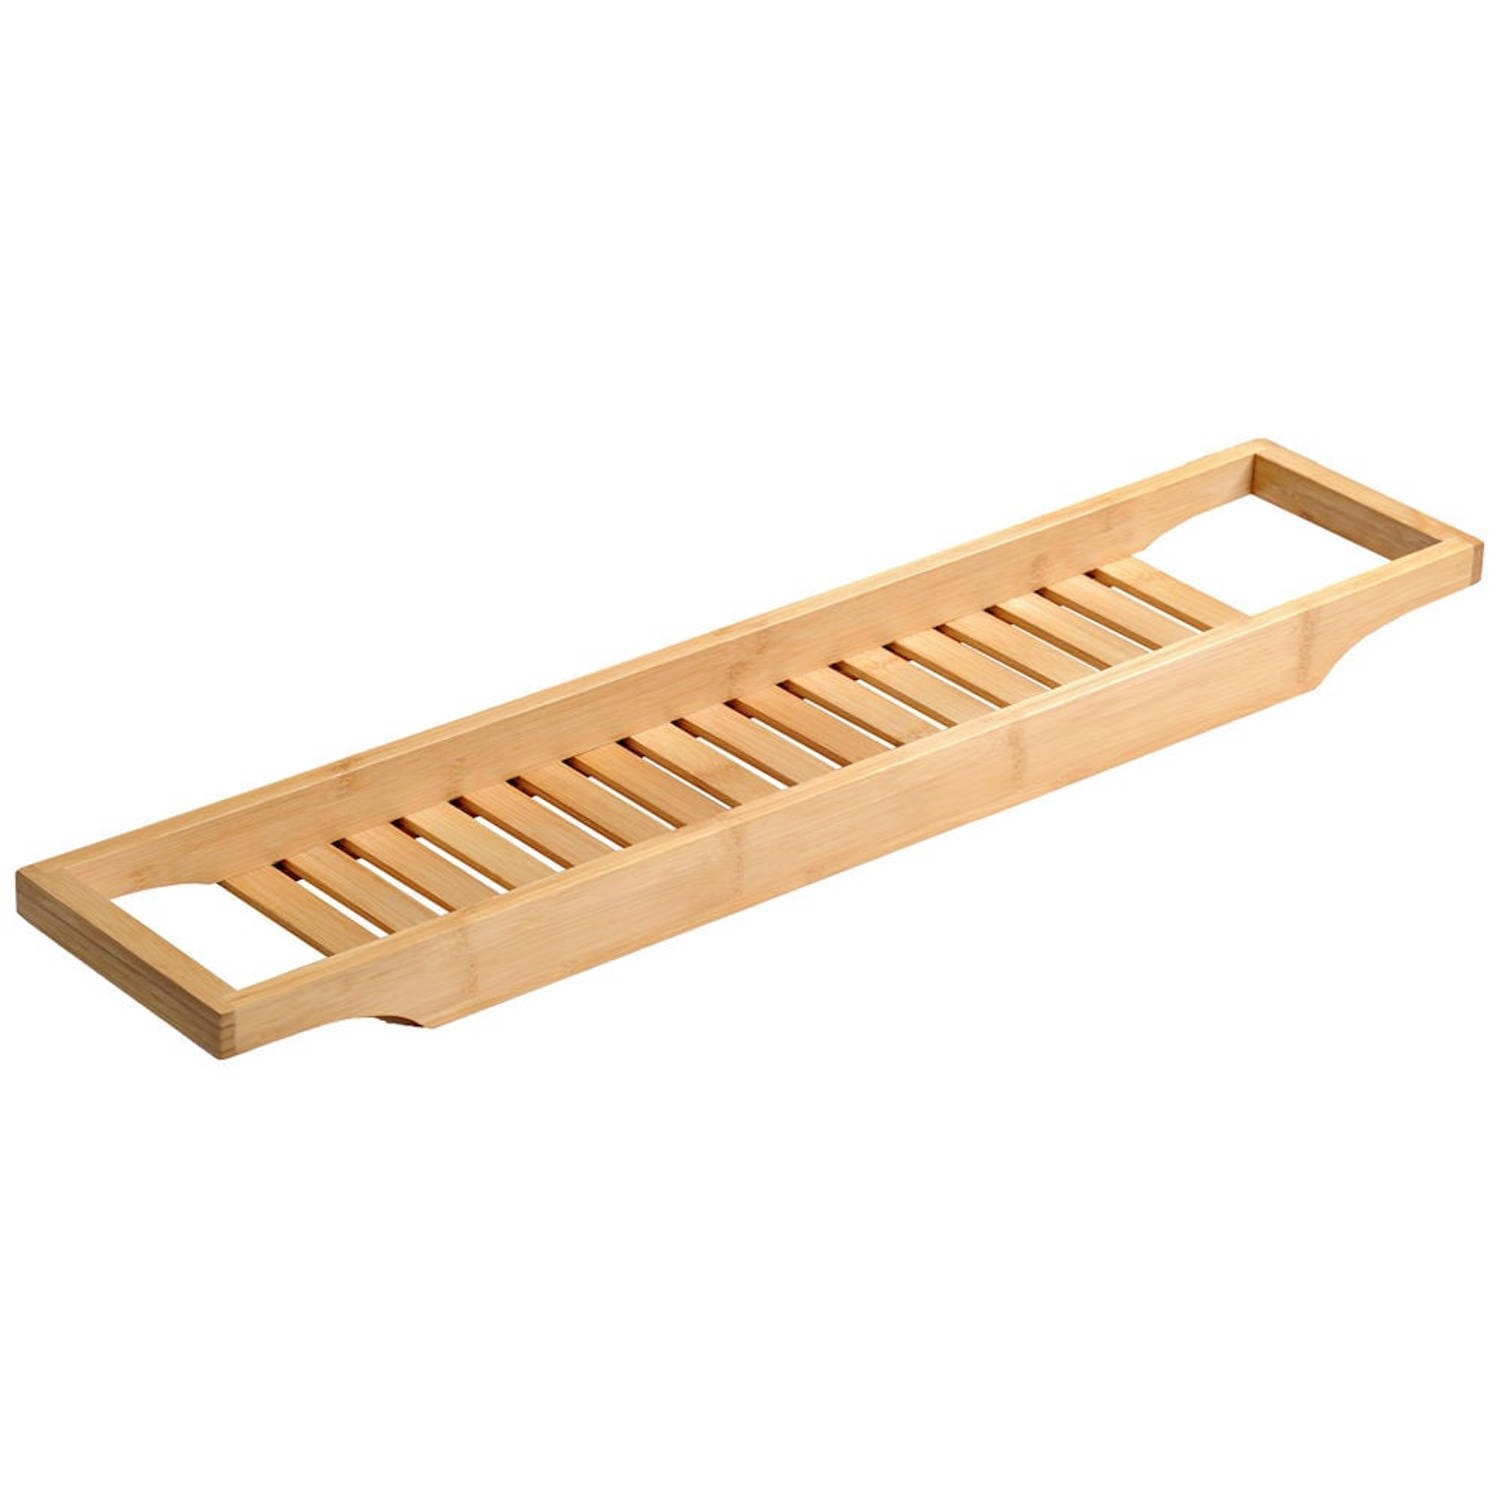 FSC® Badrekje voor over bad - 70 Cm lang - FSC® Bamboe hout - Badrek - Badplank - Badbrug - Basic bad tafeltje voor in bad